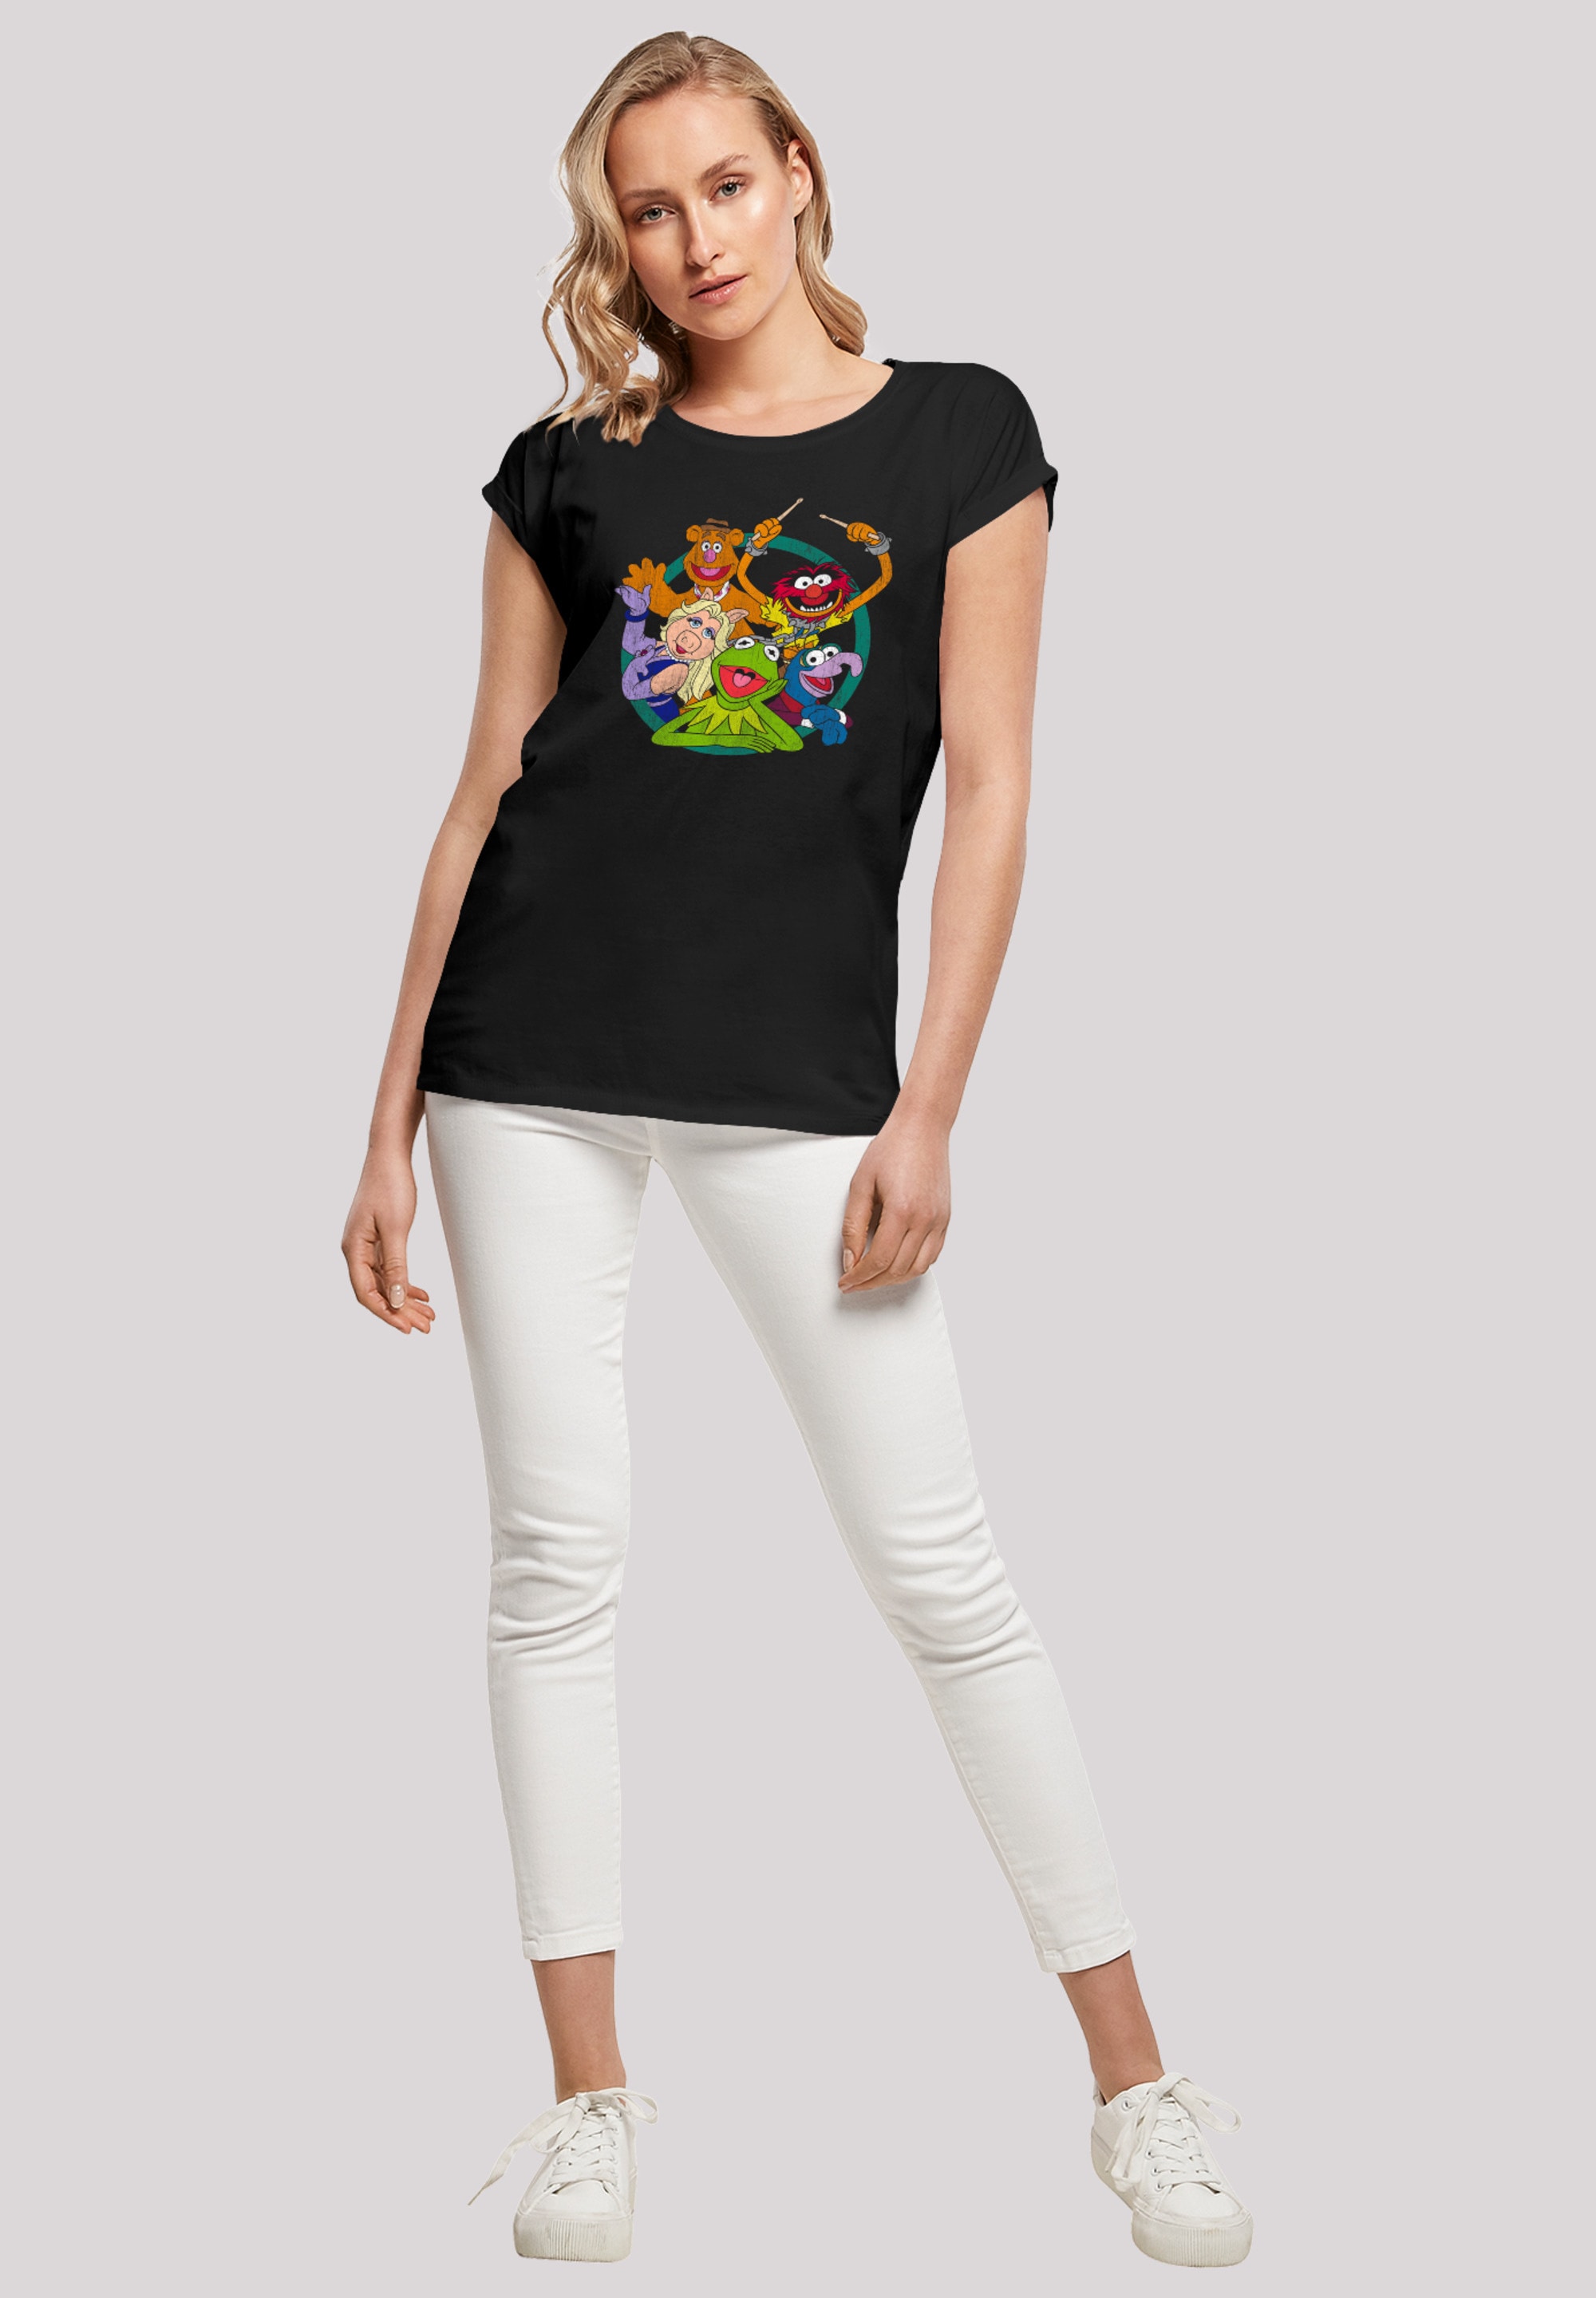 F4NT4STIC T-Shirt Circle«, Muppets Group Die online »Disney Print